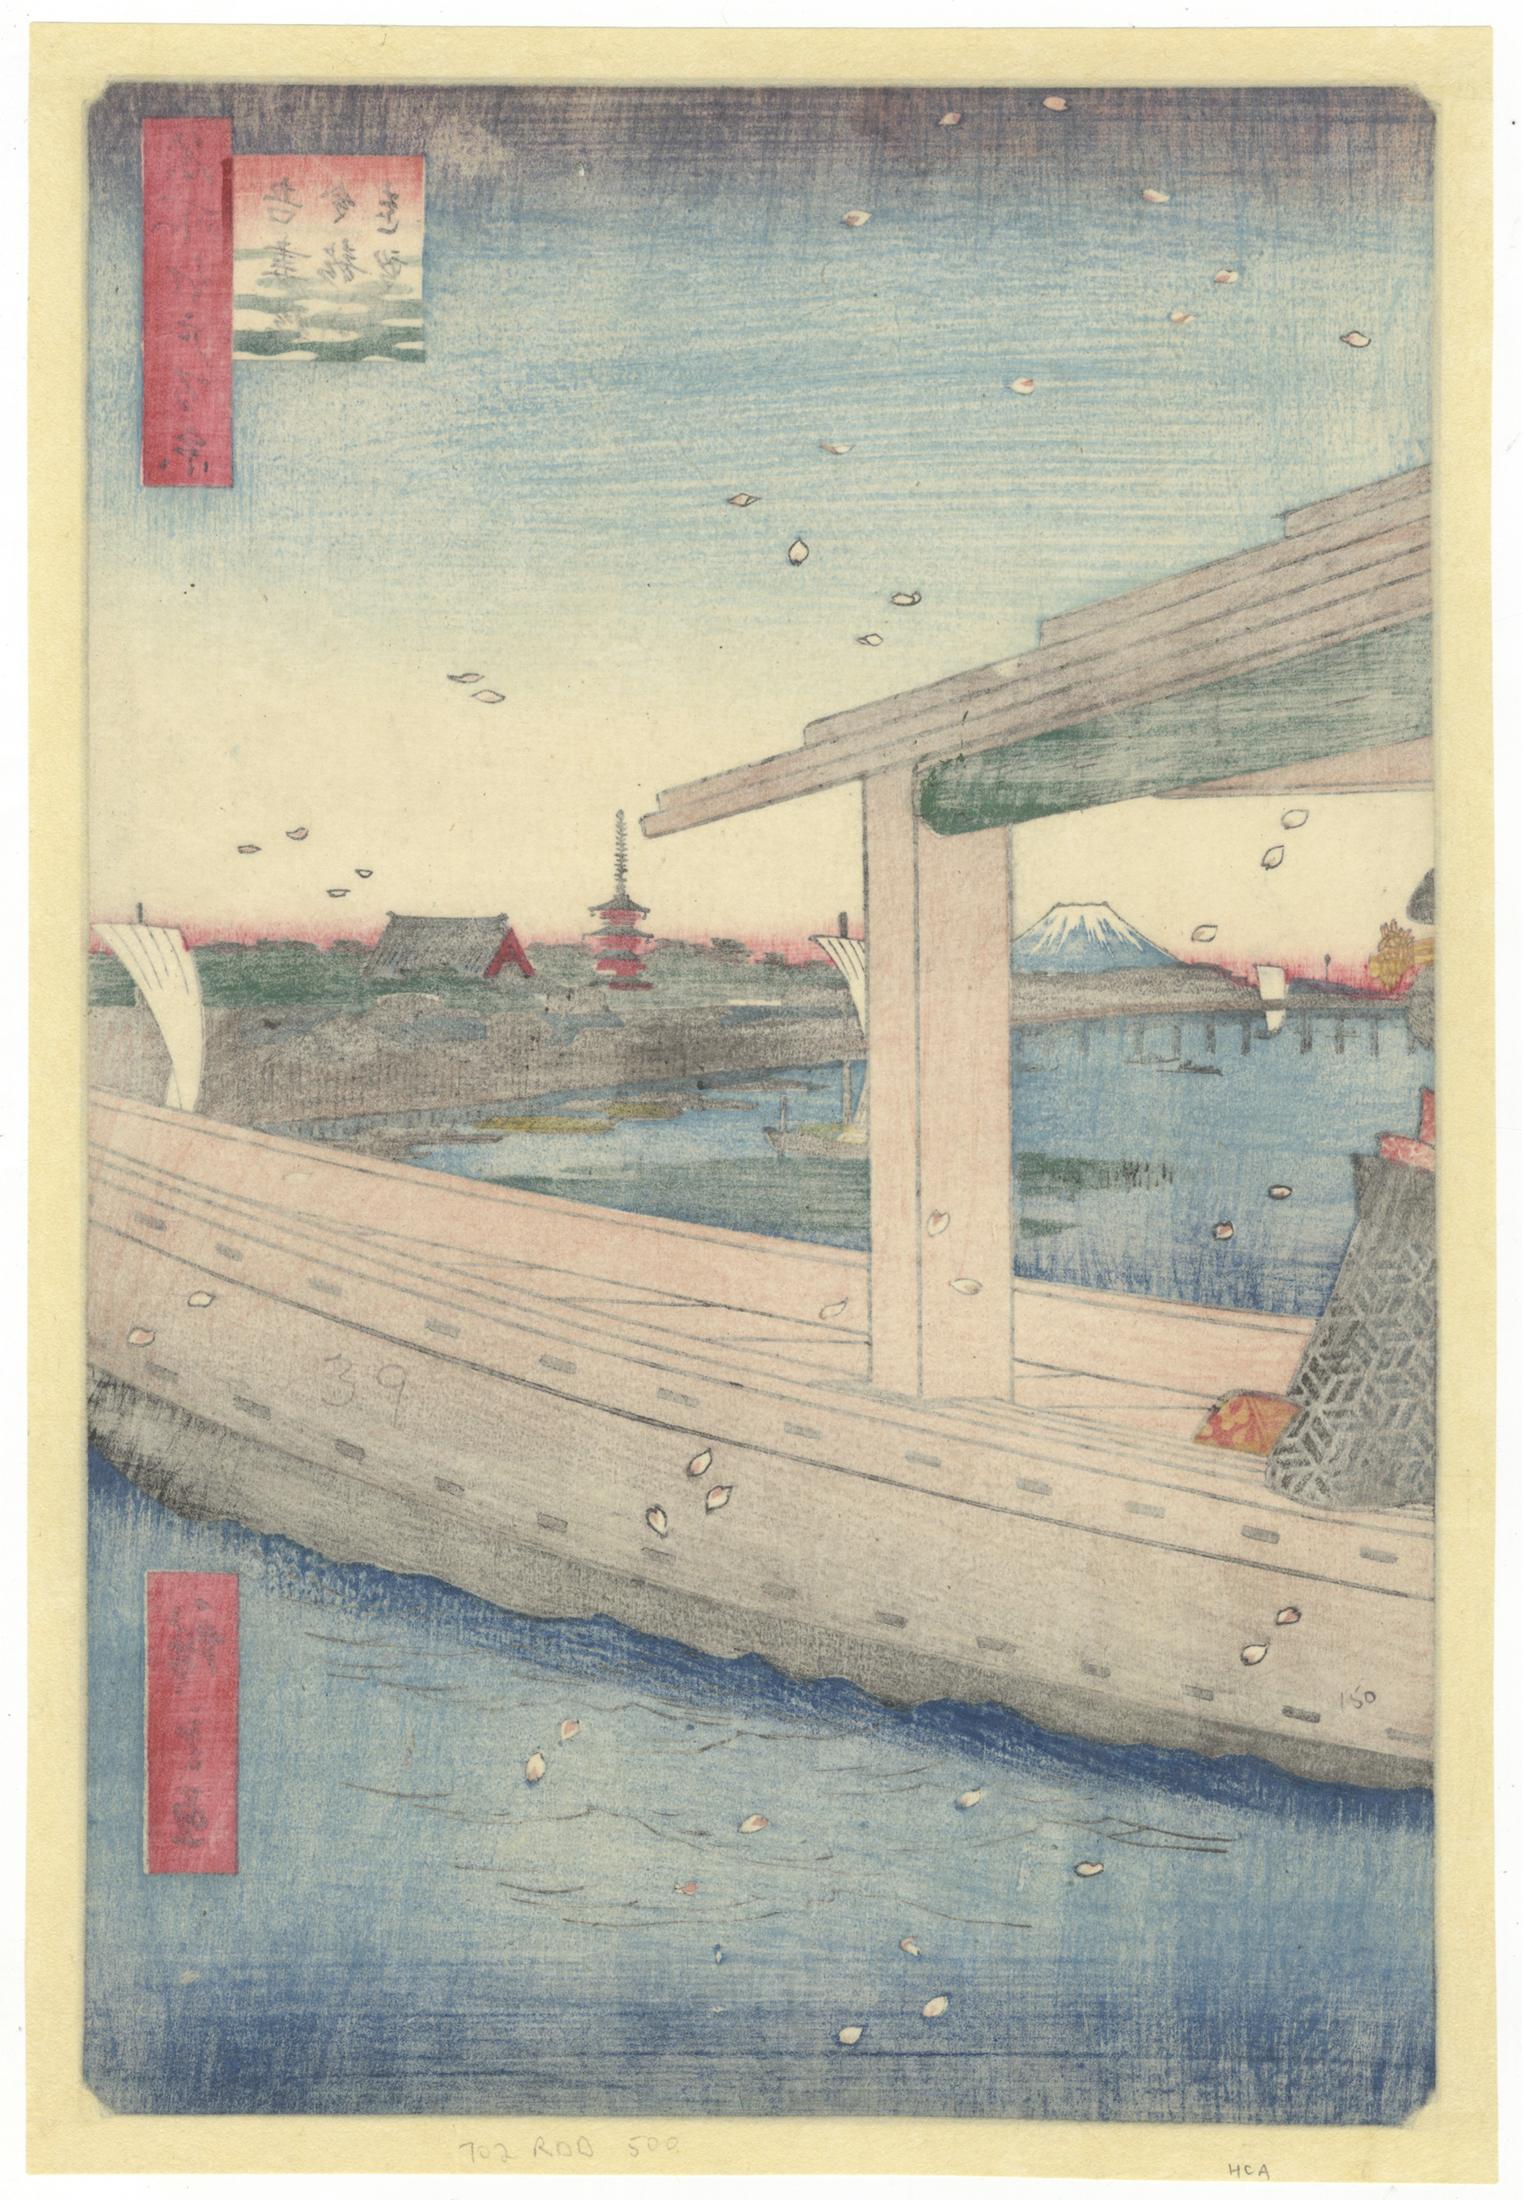 Ando Hiroshige, Edo, Ukiyo-e, Original Japanese Woodblock Print, Landscape, Boat - Gray Figurative Print by Utagawa Hiroshige (Ando Hiroshige)